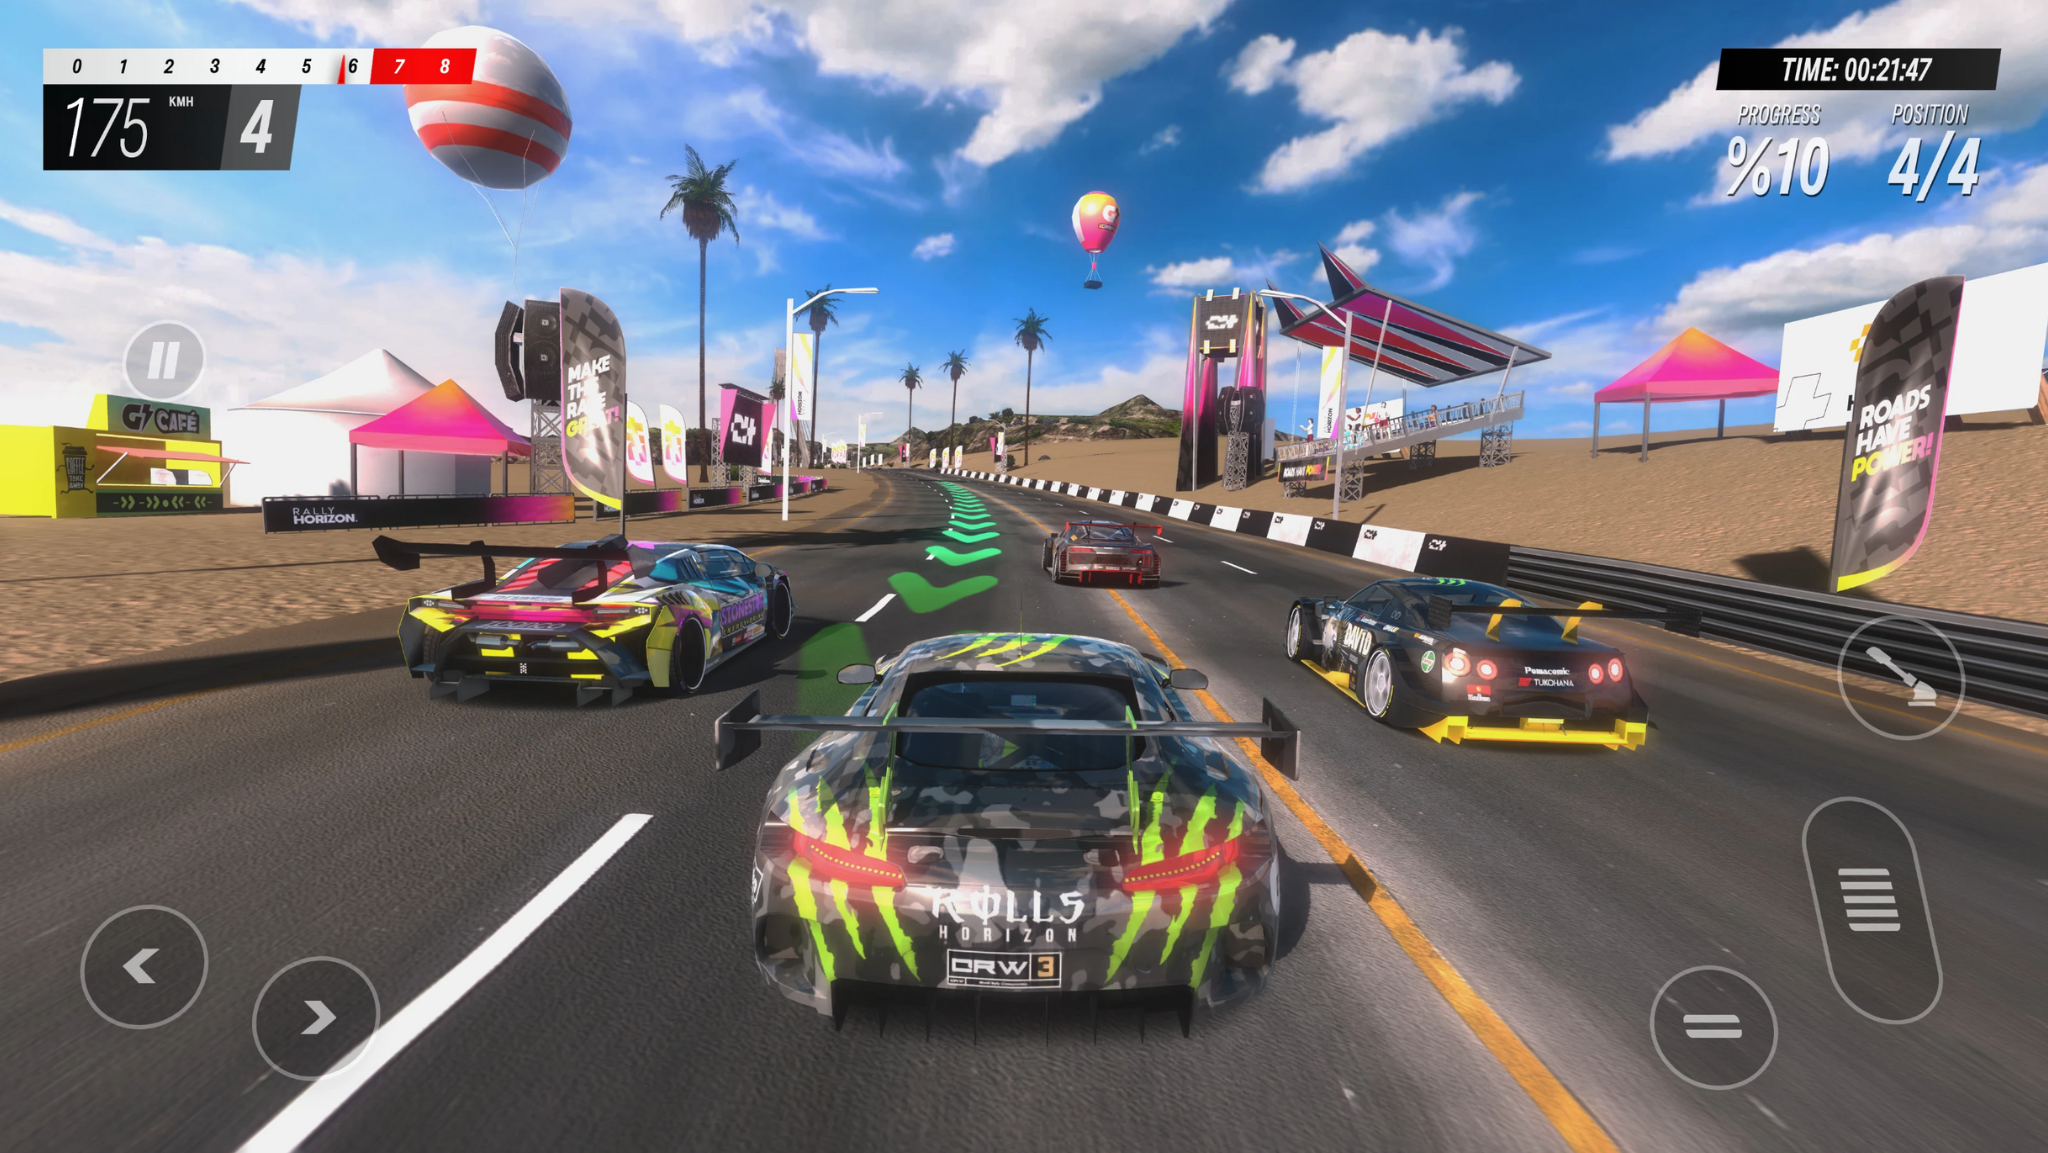 Rally Horizon เกมมือถือแนวแข่งรถสุดจี๊ด หลุดโลก ที่มีคอนเซ็ปน่าสนใจ พร้อมให้ทุกคนได้ไปมันส์กันแล้ววันนี้บน Android